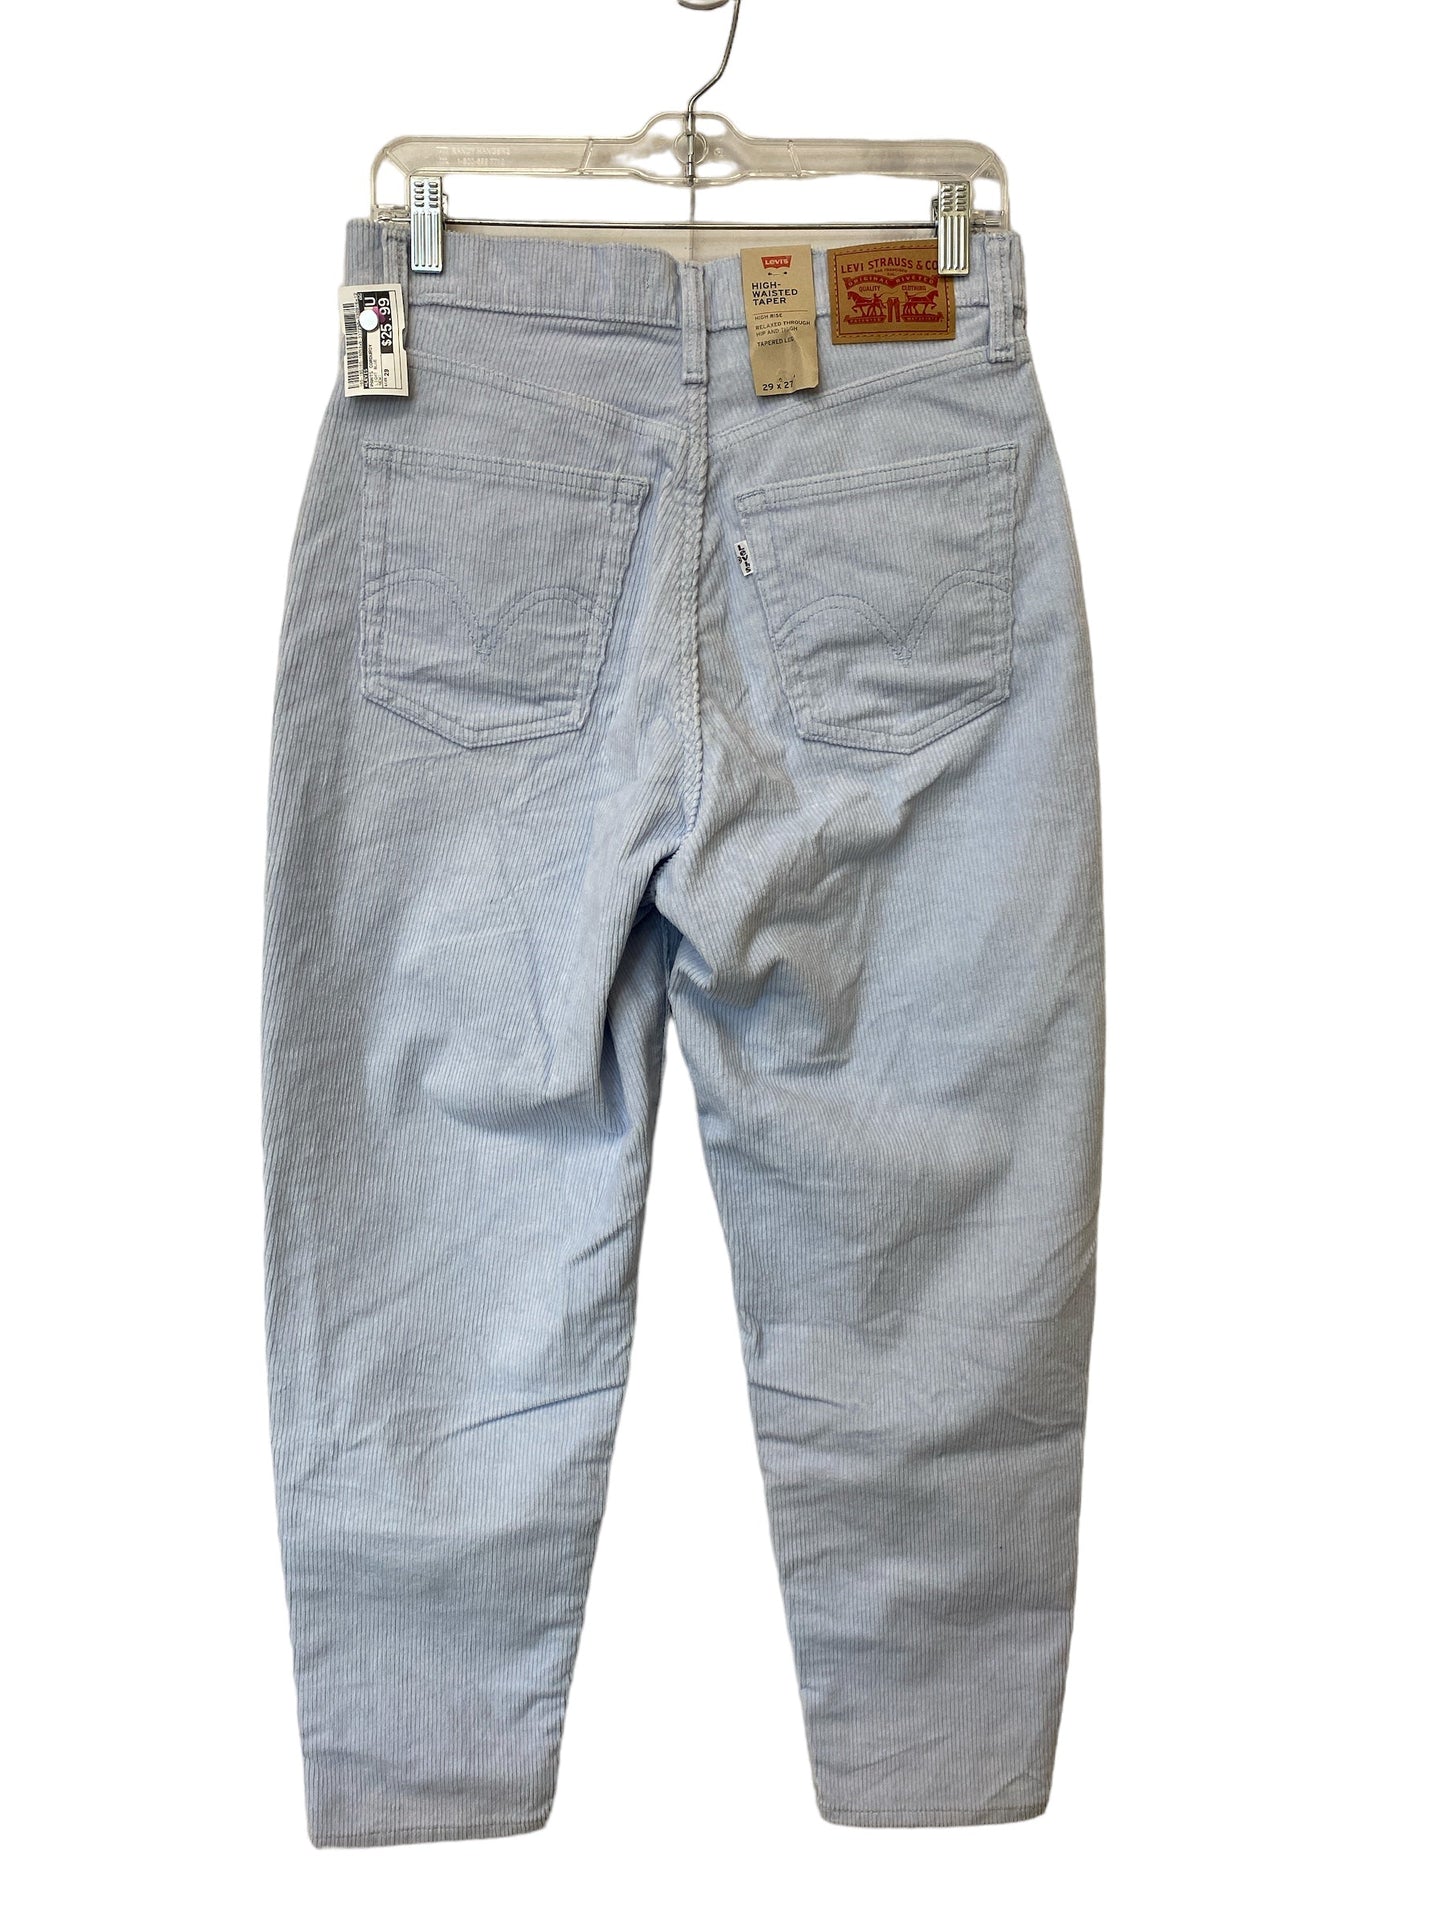 Pants Corduroy By Levis  Size: 29